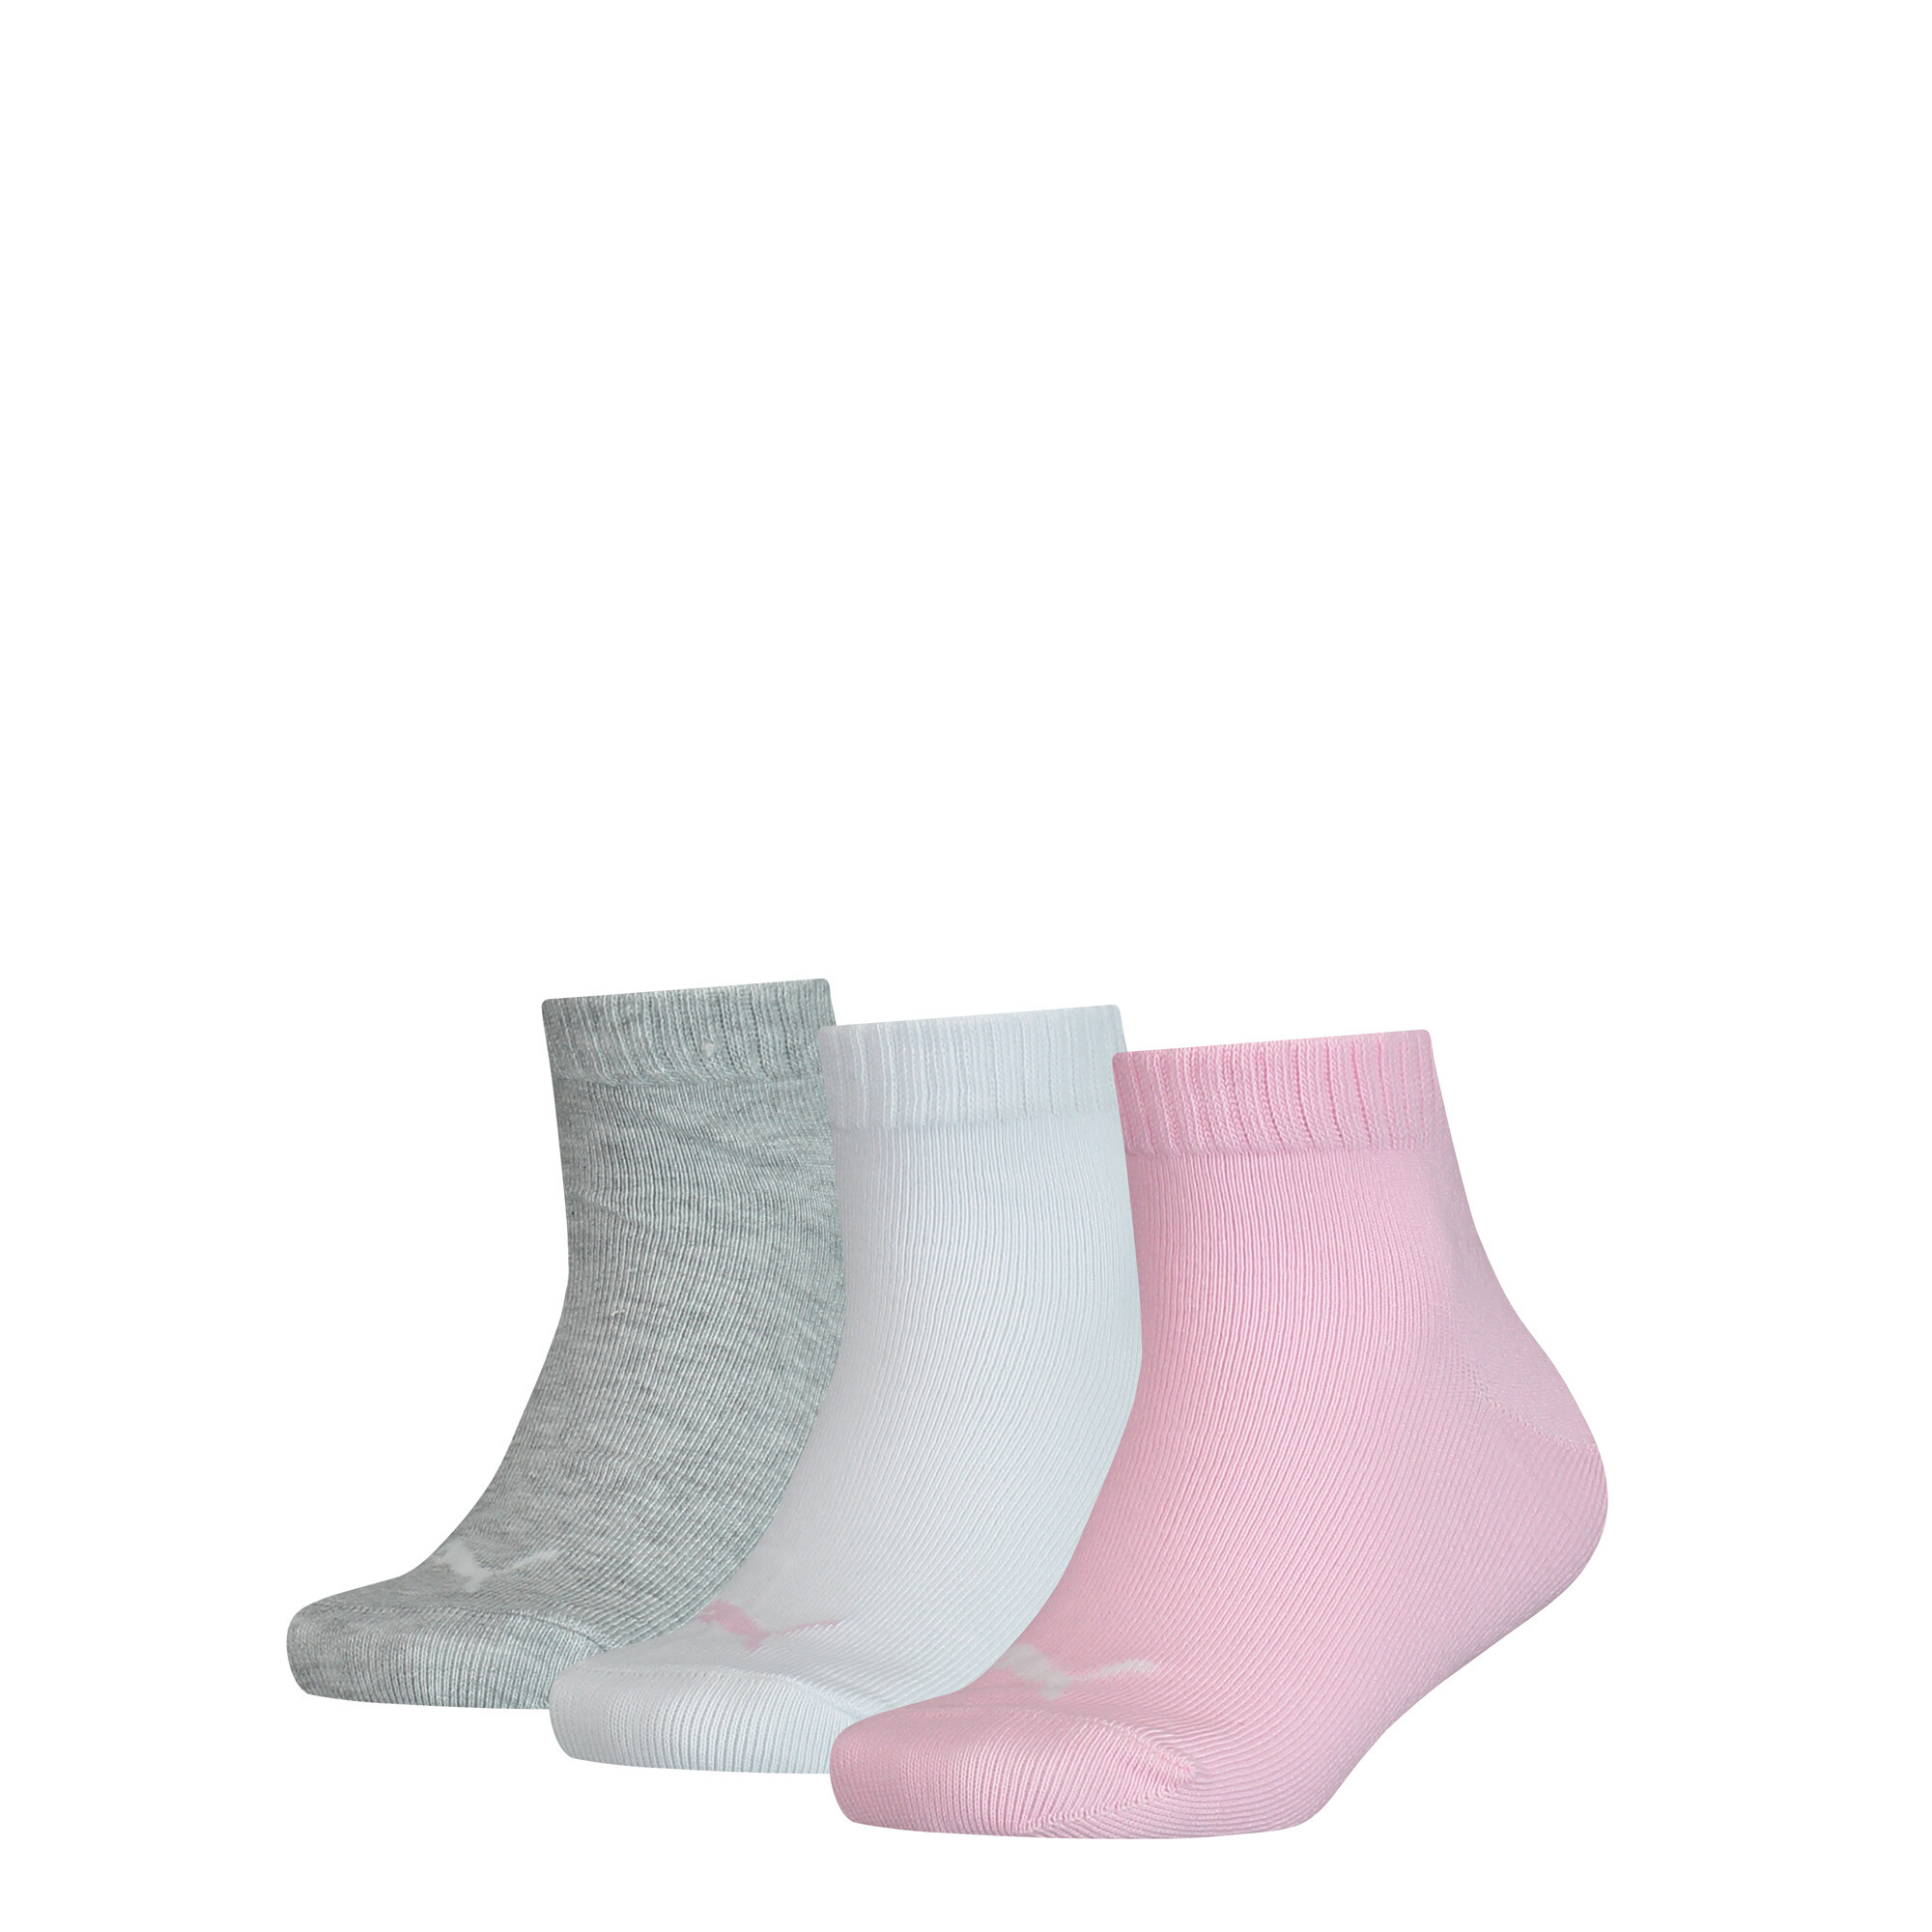 Kids' PUMA Quarter Socks 3 Pack In Pink, Size 39-42